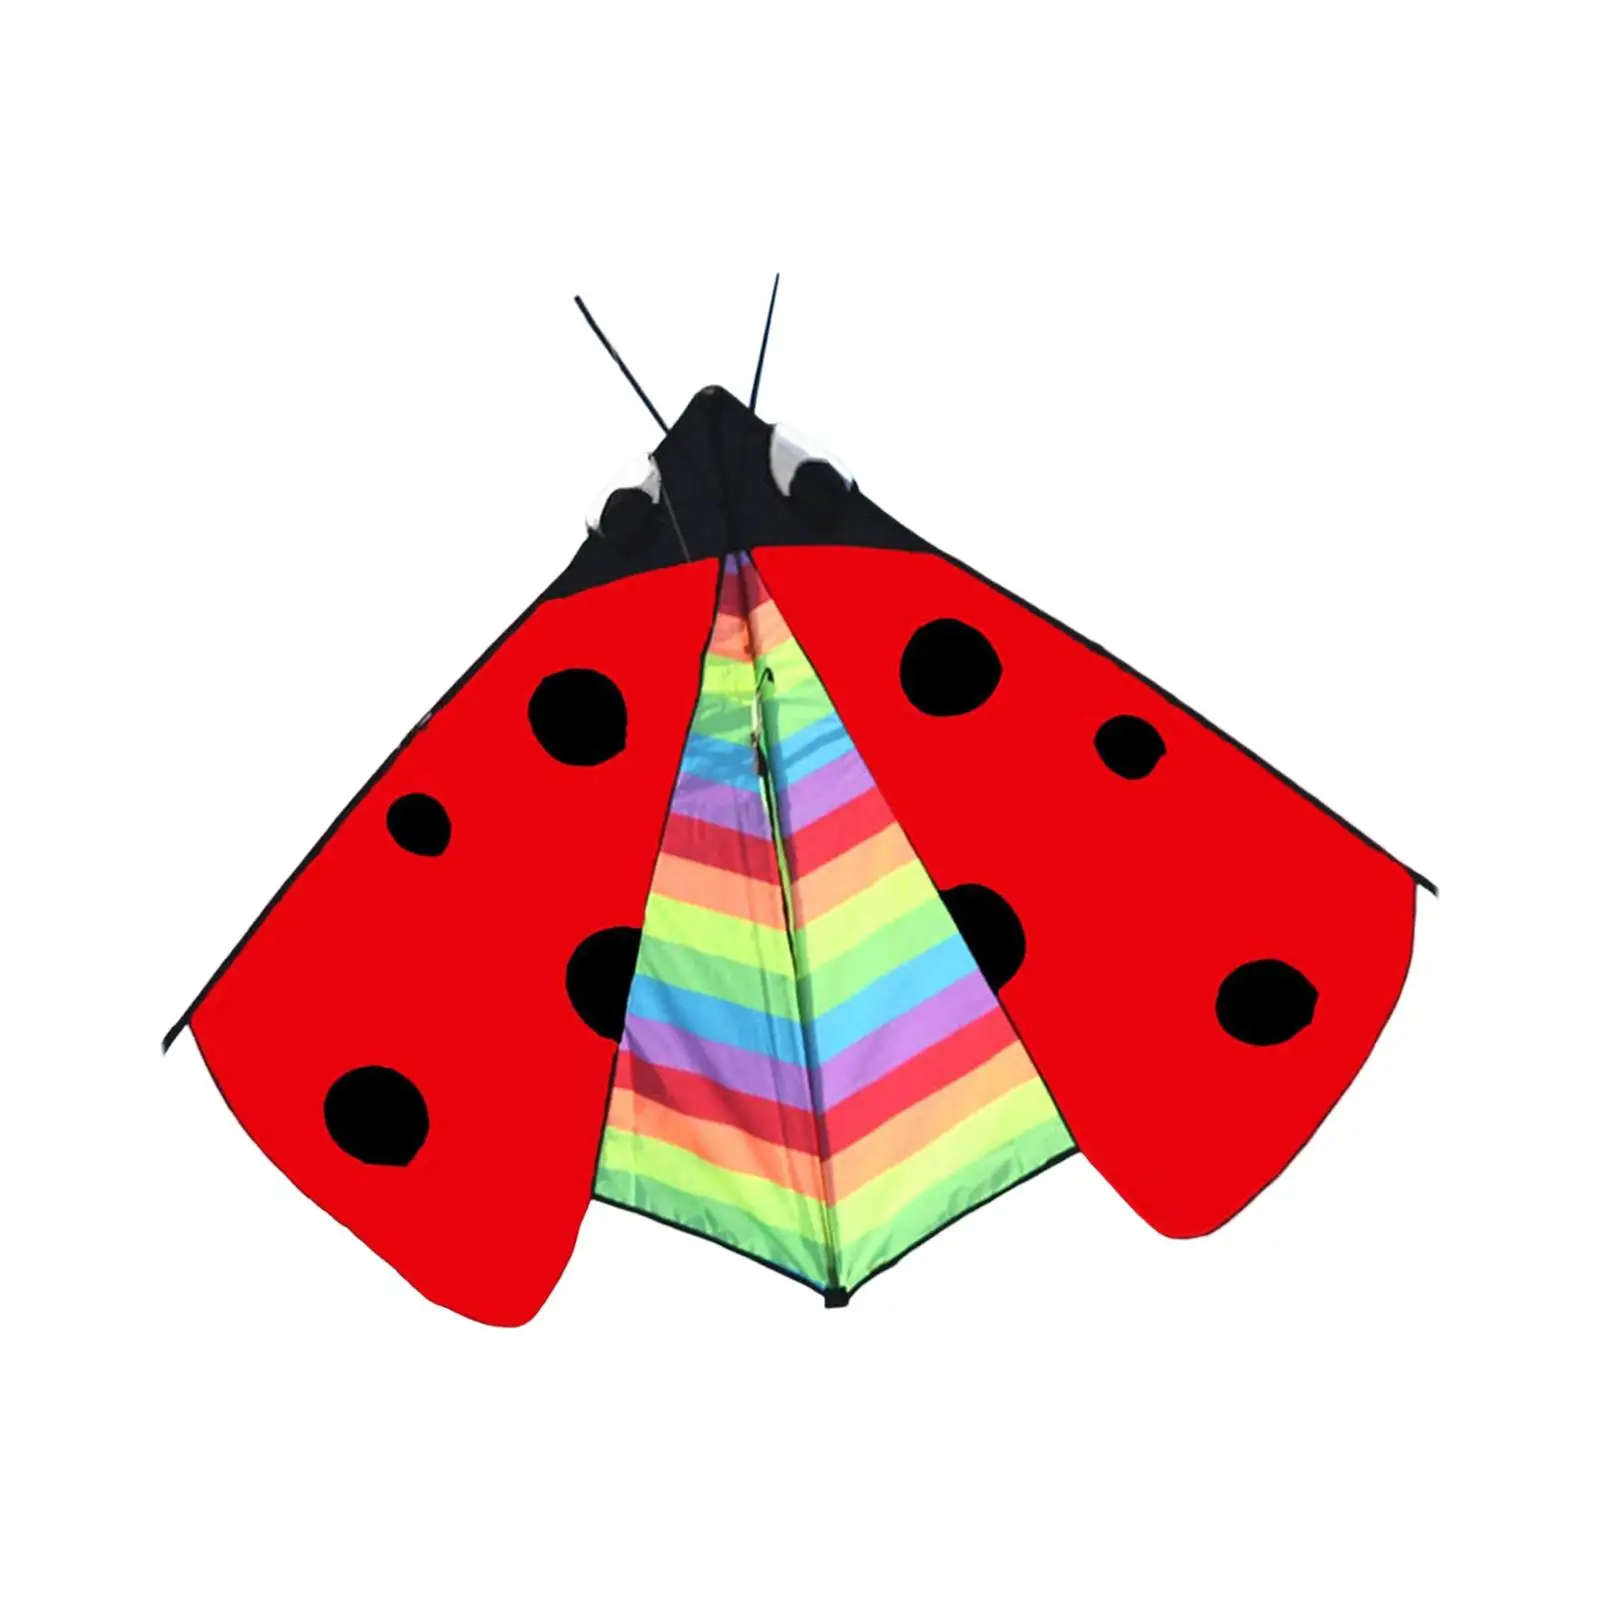 Large Delta Kite Fly Kite Single Line Easy Flyer Novelty Triangle Ladybug Kite for Park Outdoor Garden Beach Family Trips